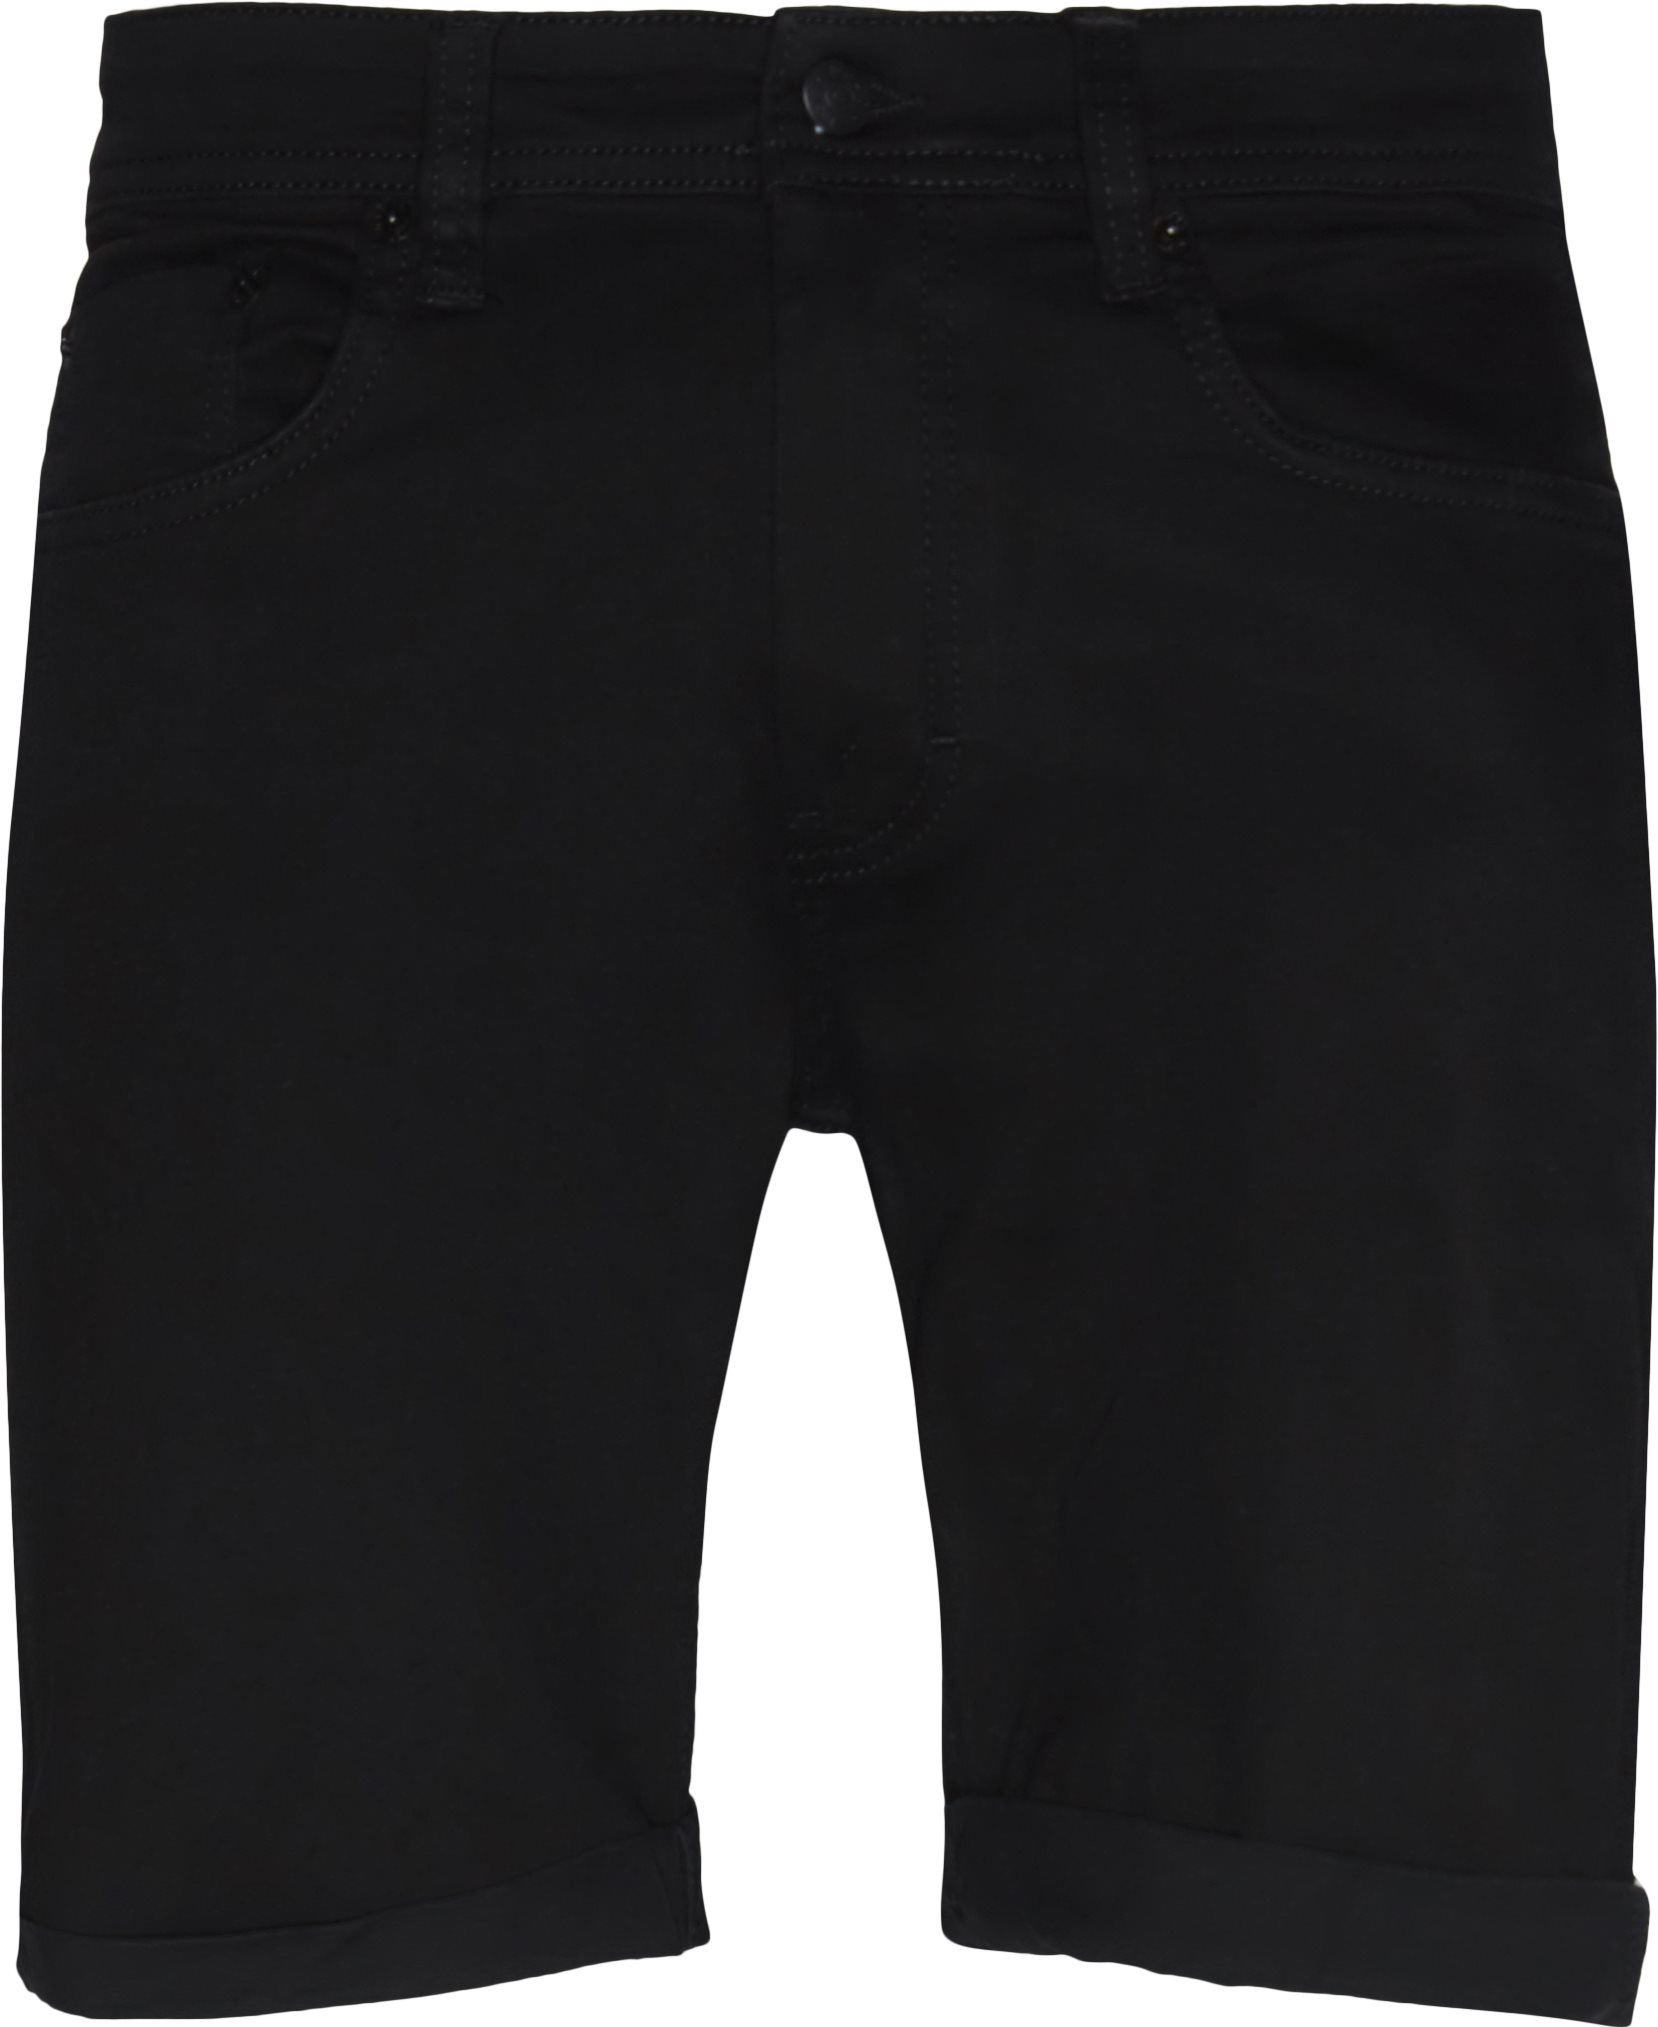 Black Night Mike Shorts - Shorts - Regular fit - Black